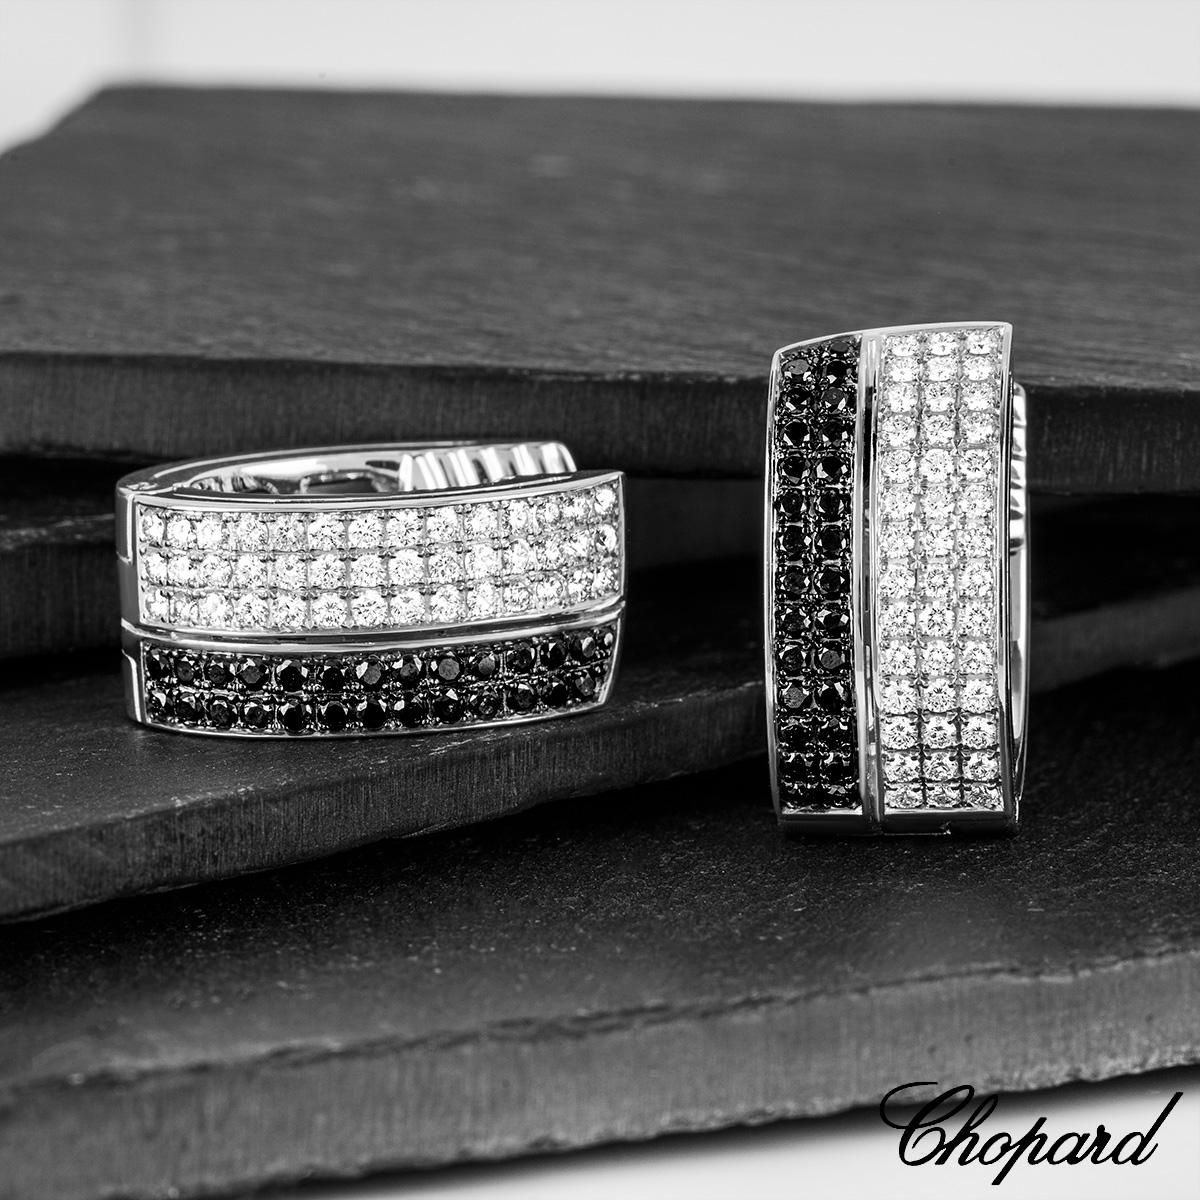 Women's Chopard Black and White Diamond Set Hoop Earrings 844073-1001 For Sale